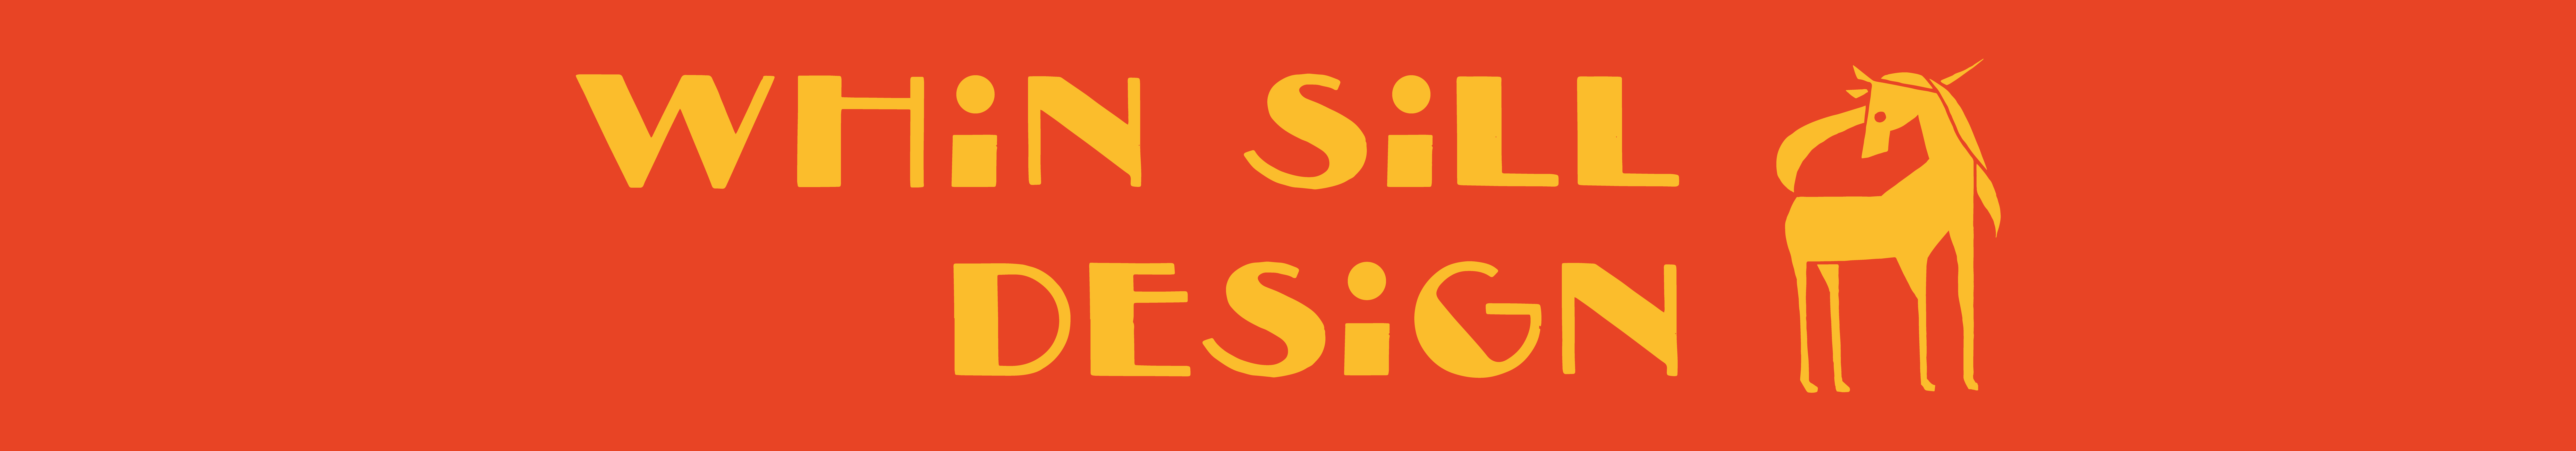 Whin Sill Design's profile banner